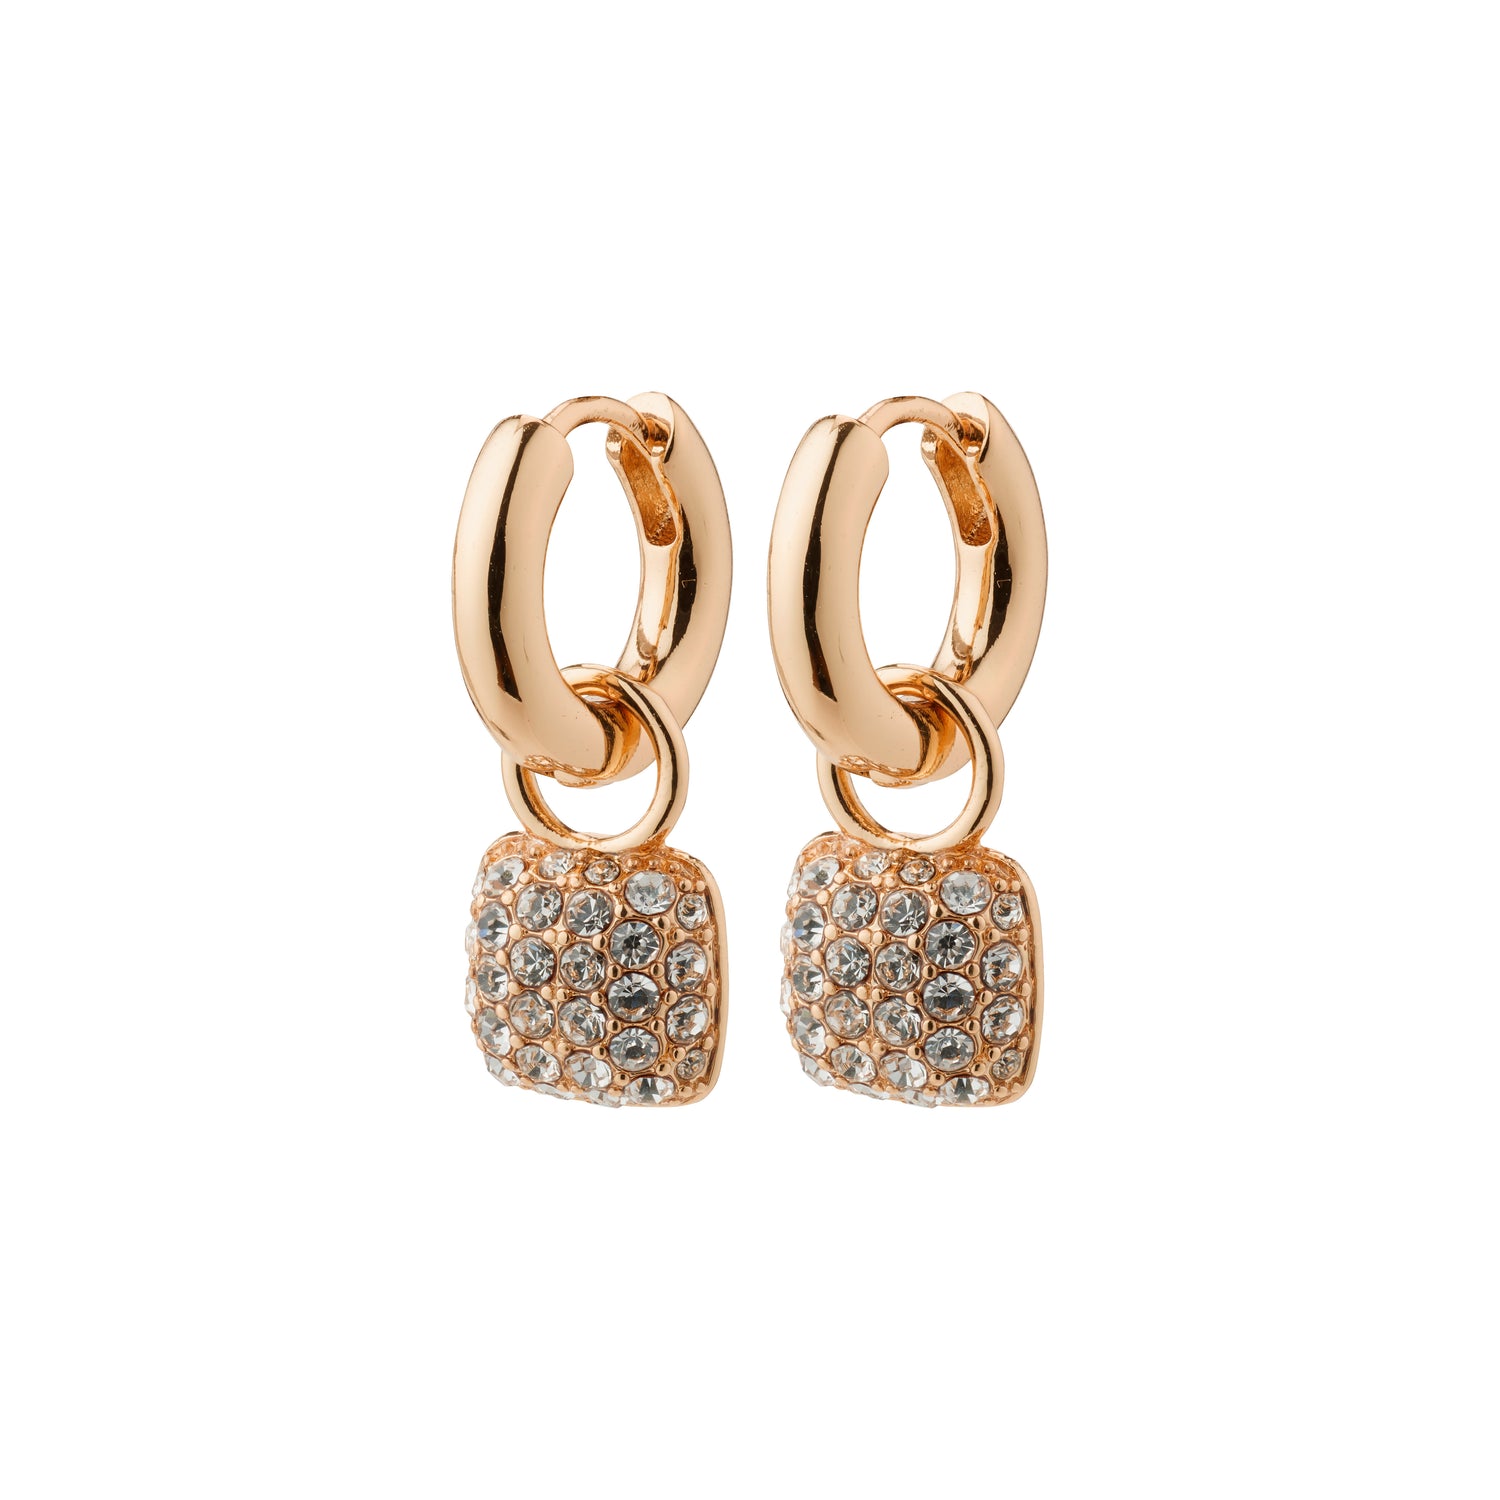 Rose gold plated earrings